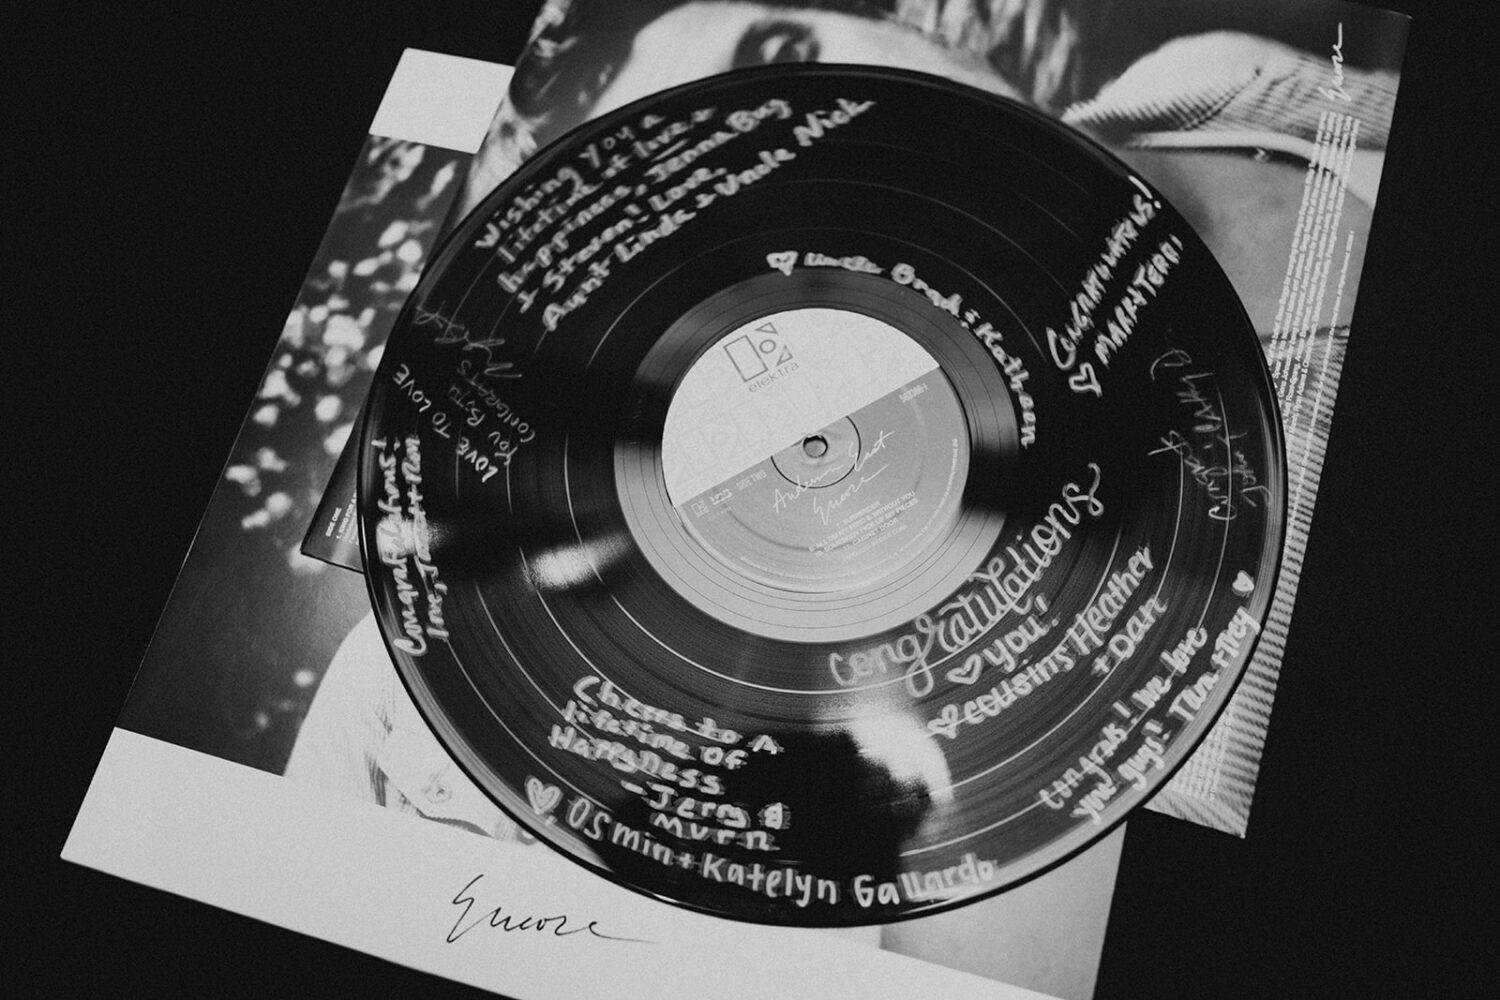 vinyl record as wedding guest book